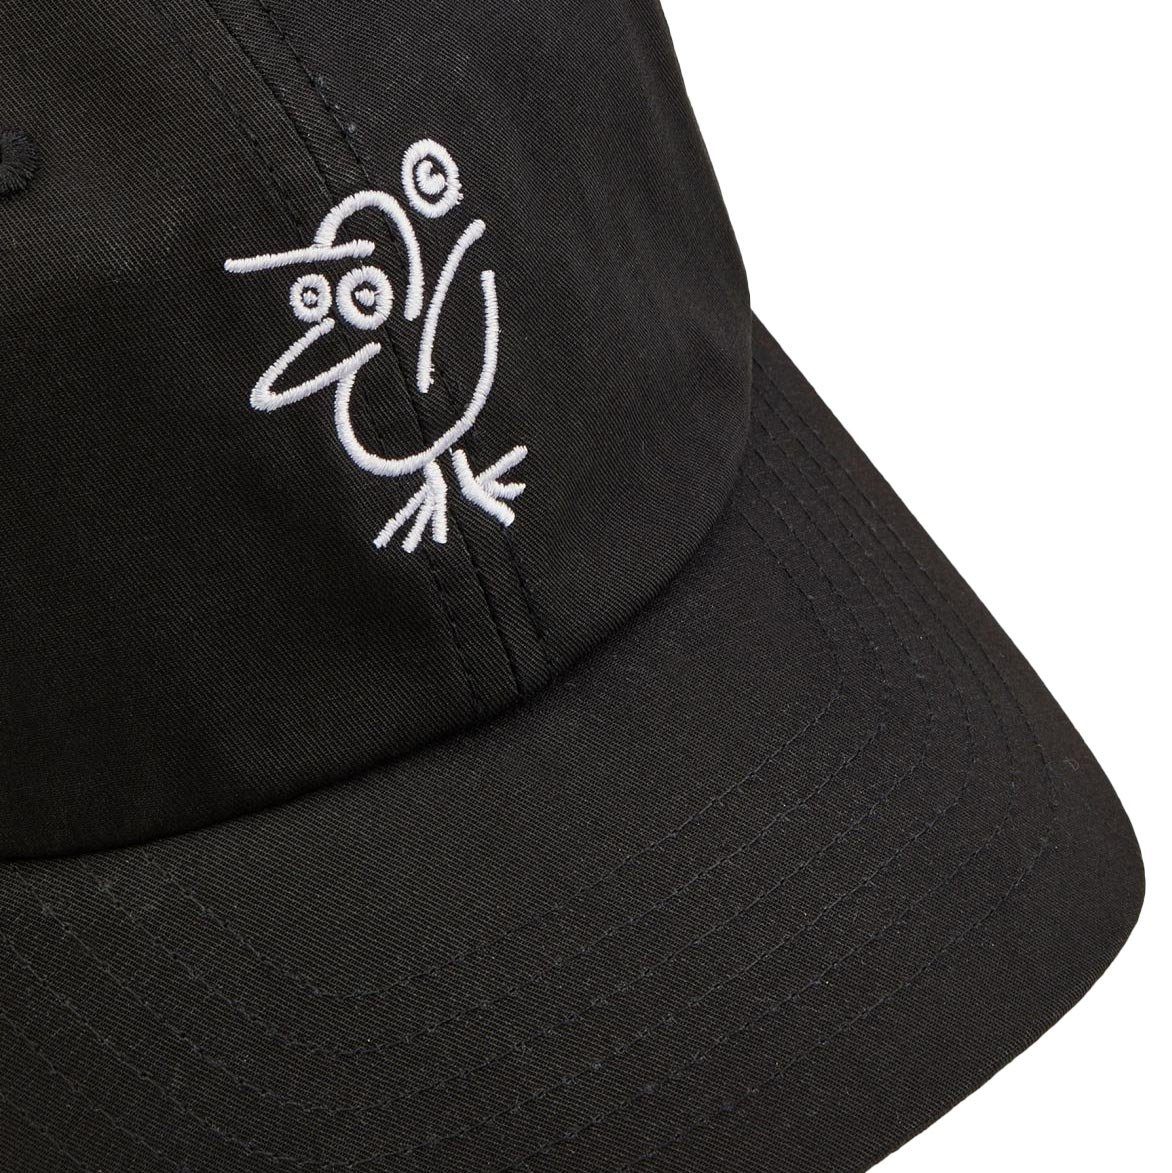 black Baseball - Cleptomanicx Gull Sketch Cap